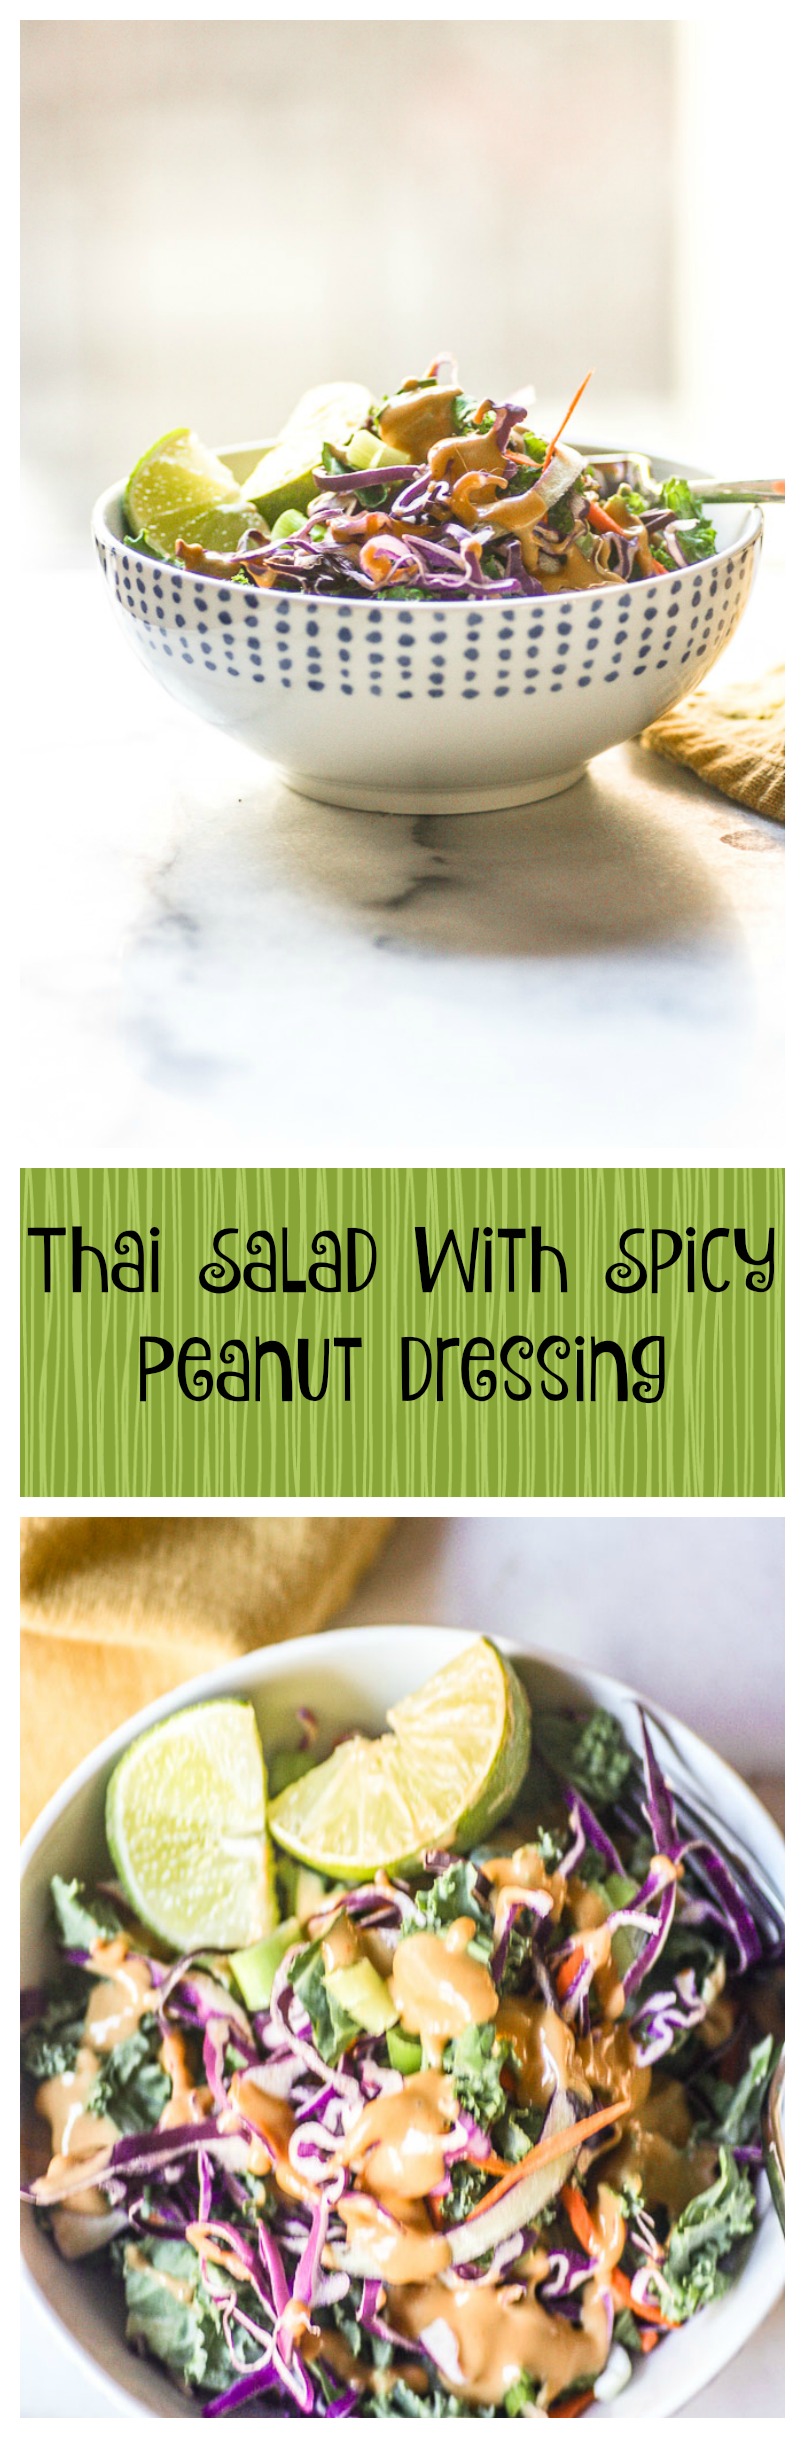 thai salad with spicy peanut dressing